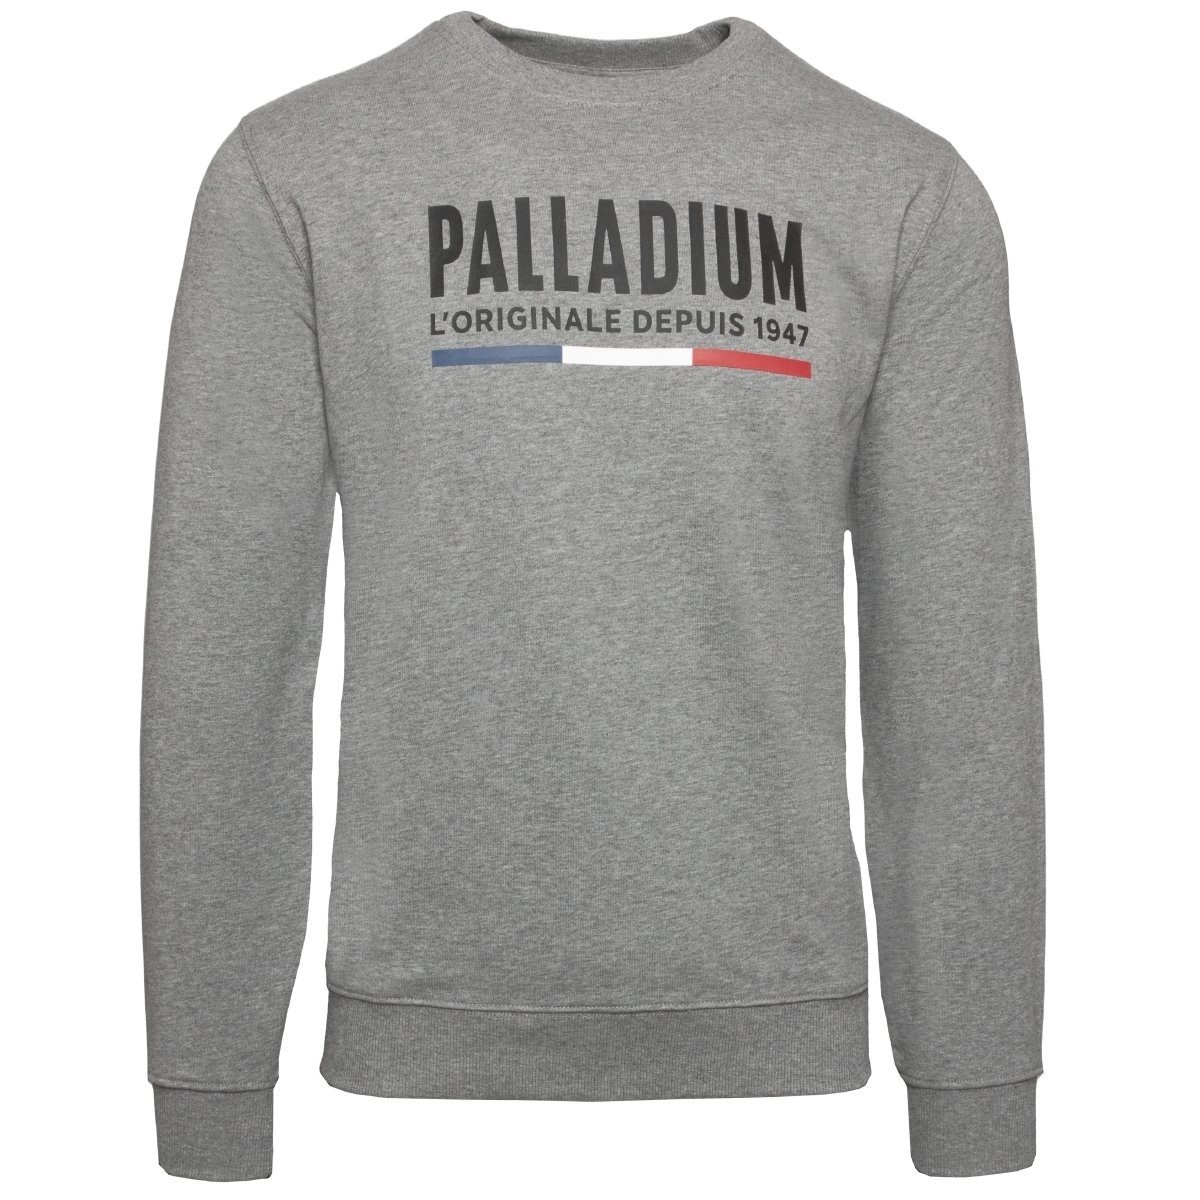 Palladium Sweatshirt Originale France Herren grau